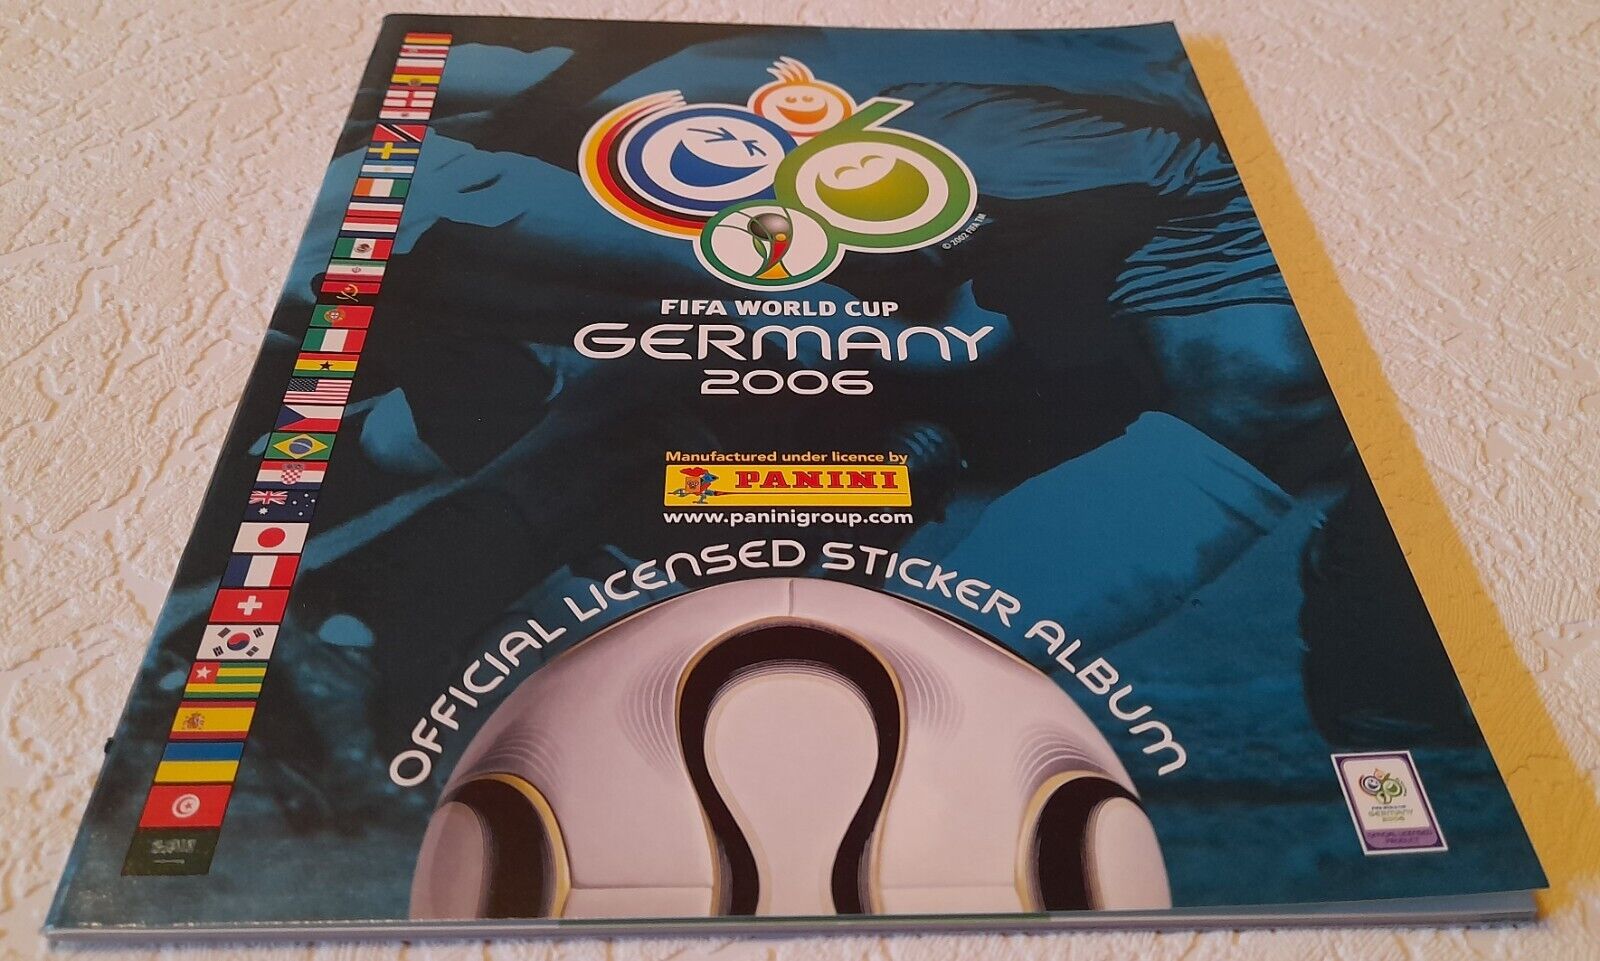 PANINI GERMANY 2006 FIFA WORLD CUP EMPTY ALBUM + 6 STICKERS - NEW WM GERMAN VER.